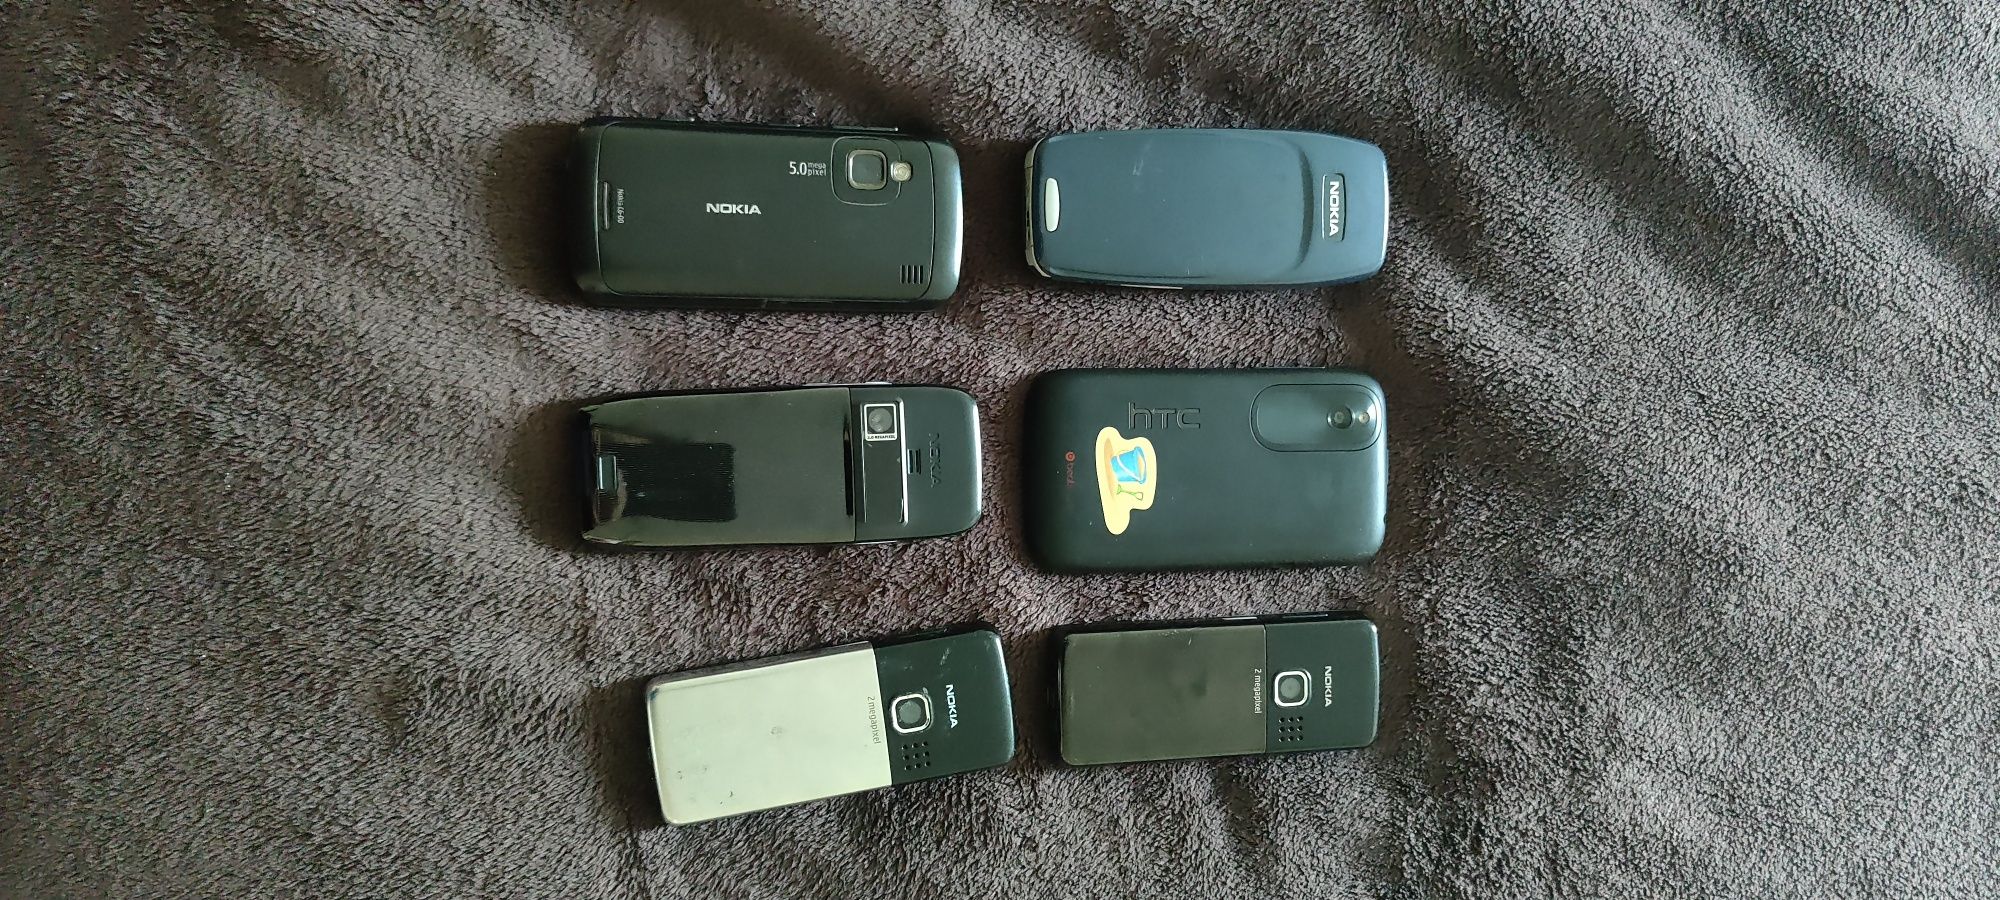 Nokia C6, E51, 3310, 6300,, HTC PM66100